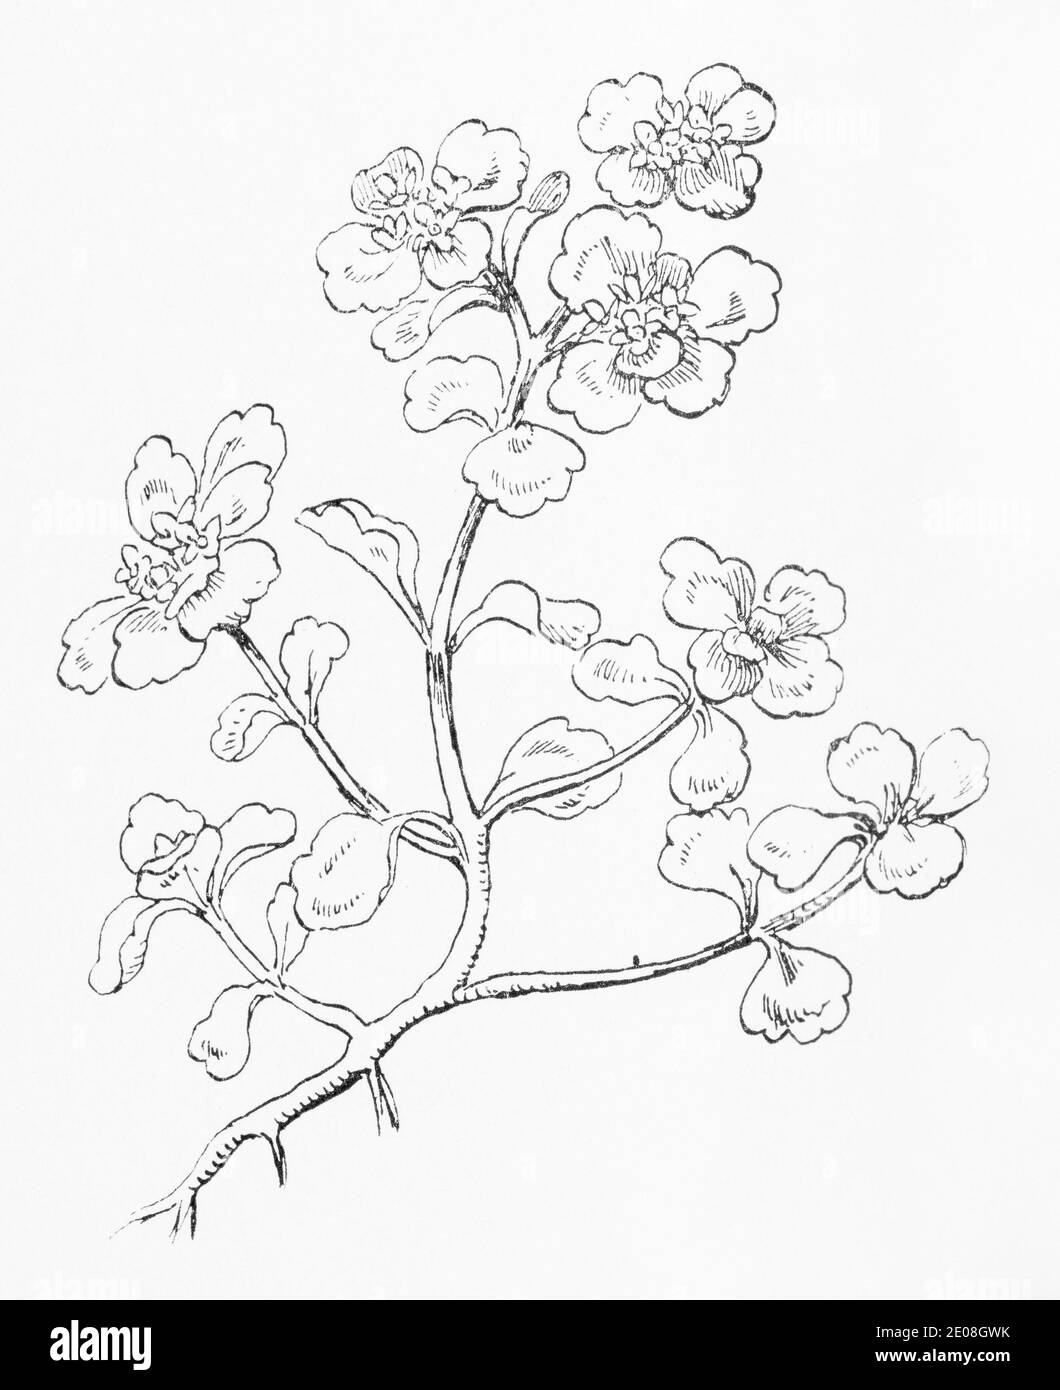 Antica illustrazione botanica incisione di sassifraggi dorati a foglie opposte / Crisosplenium oppositifolium. Vedere Note Foto Stock